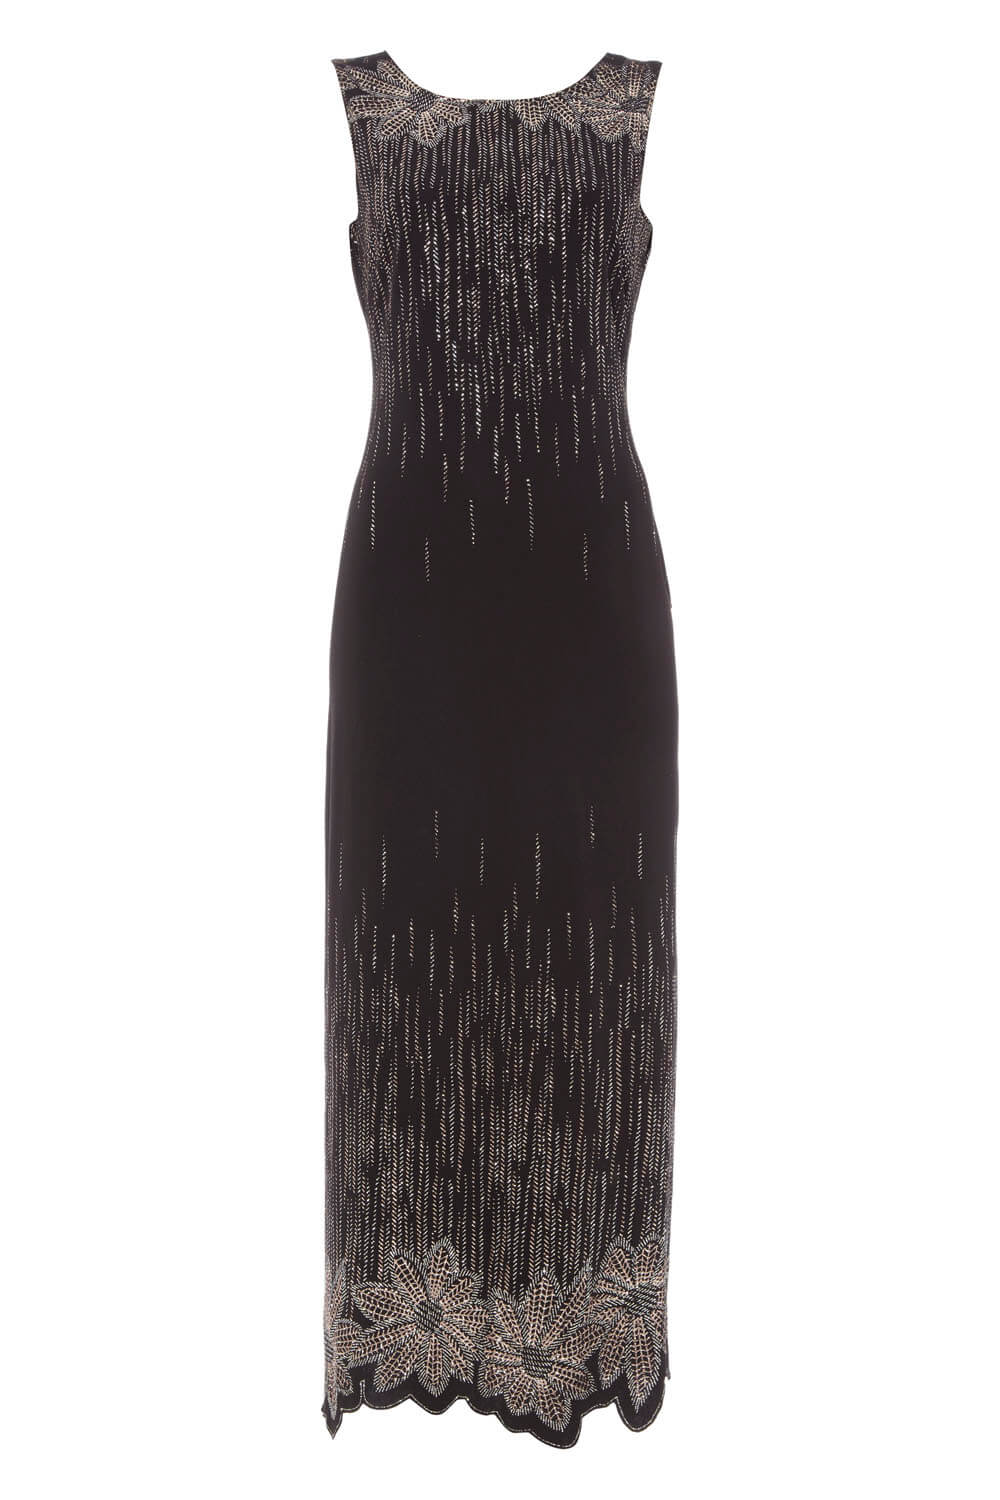 Glitter Detail Floral Maxi Dress in Black - Roman Originals UK